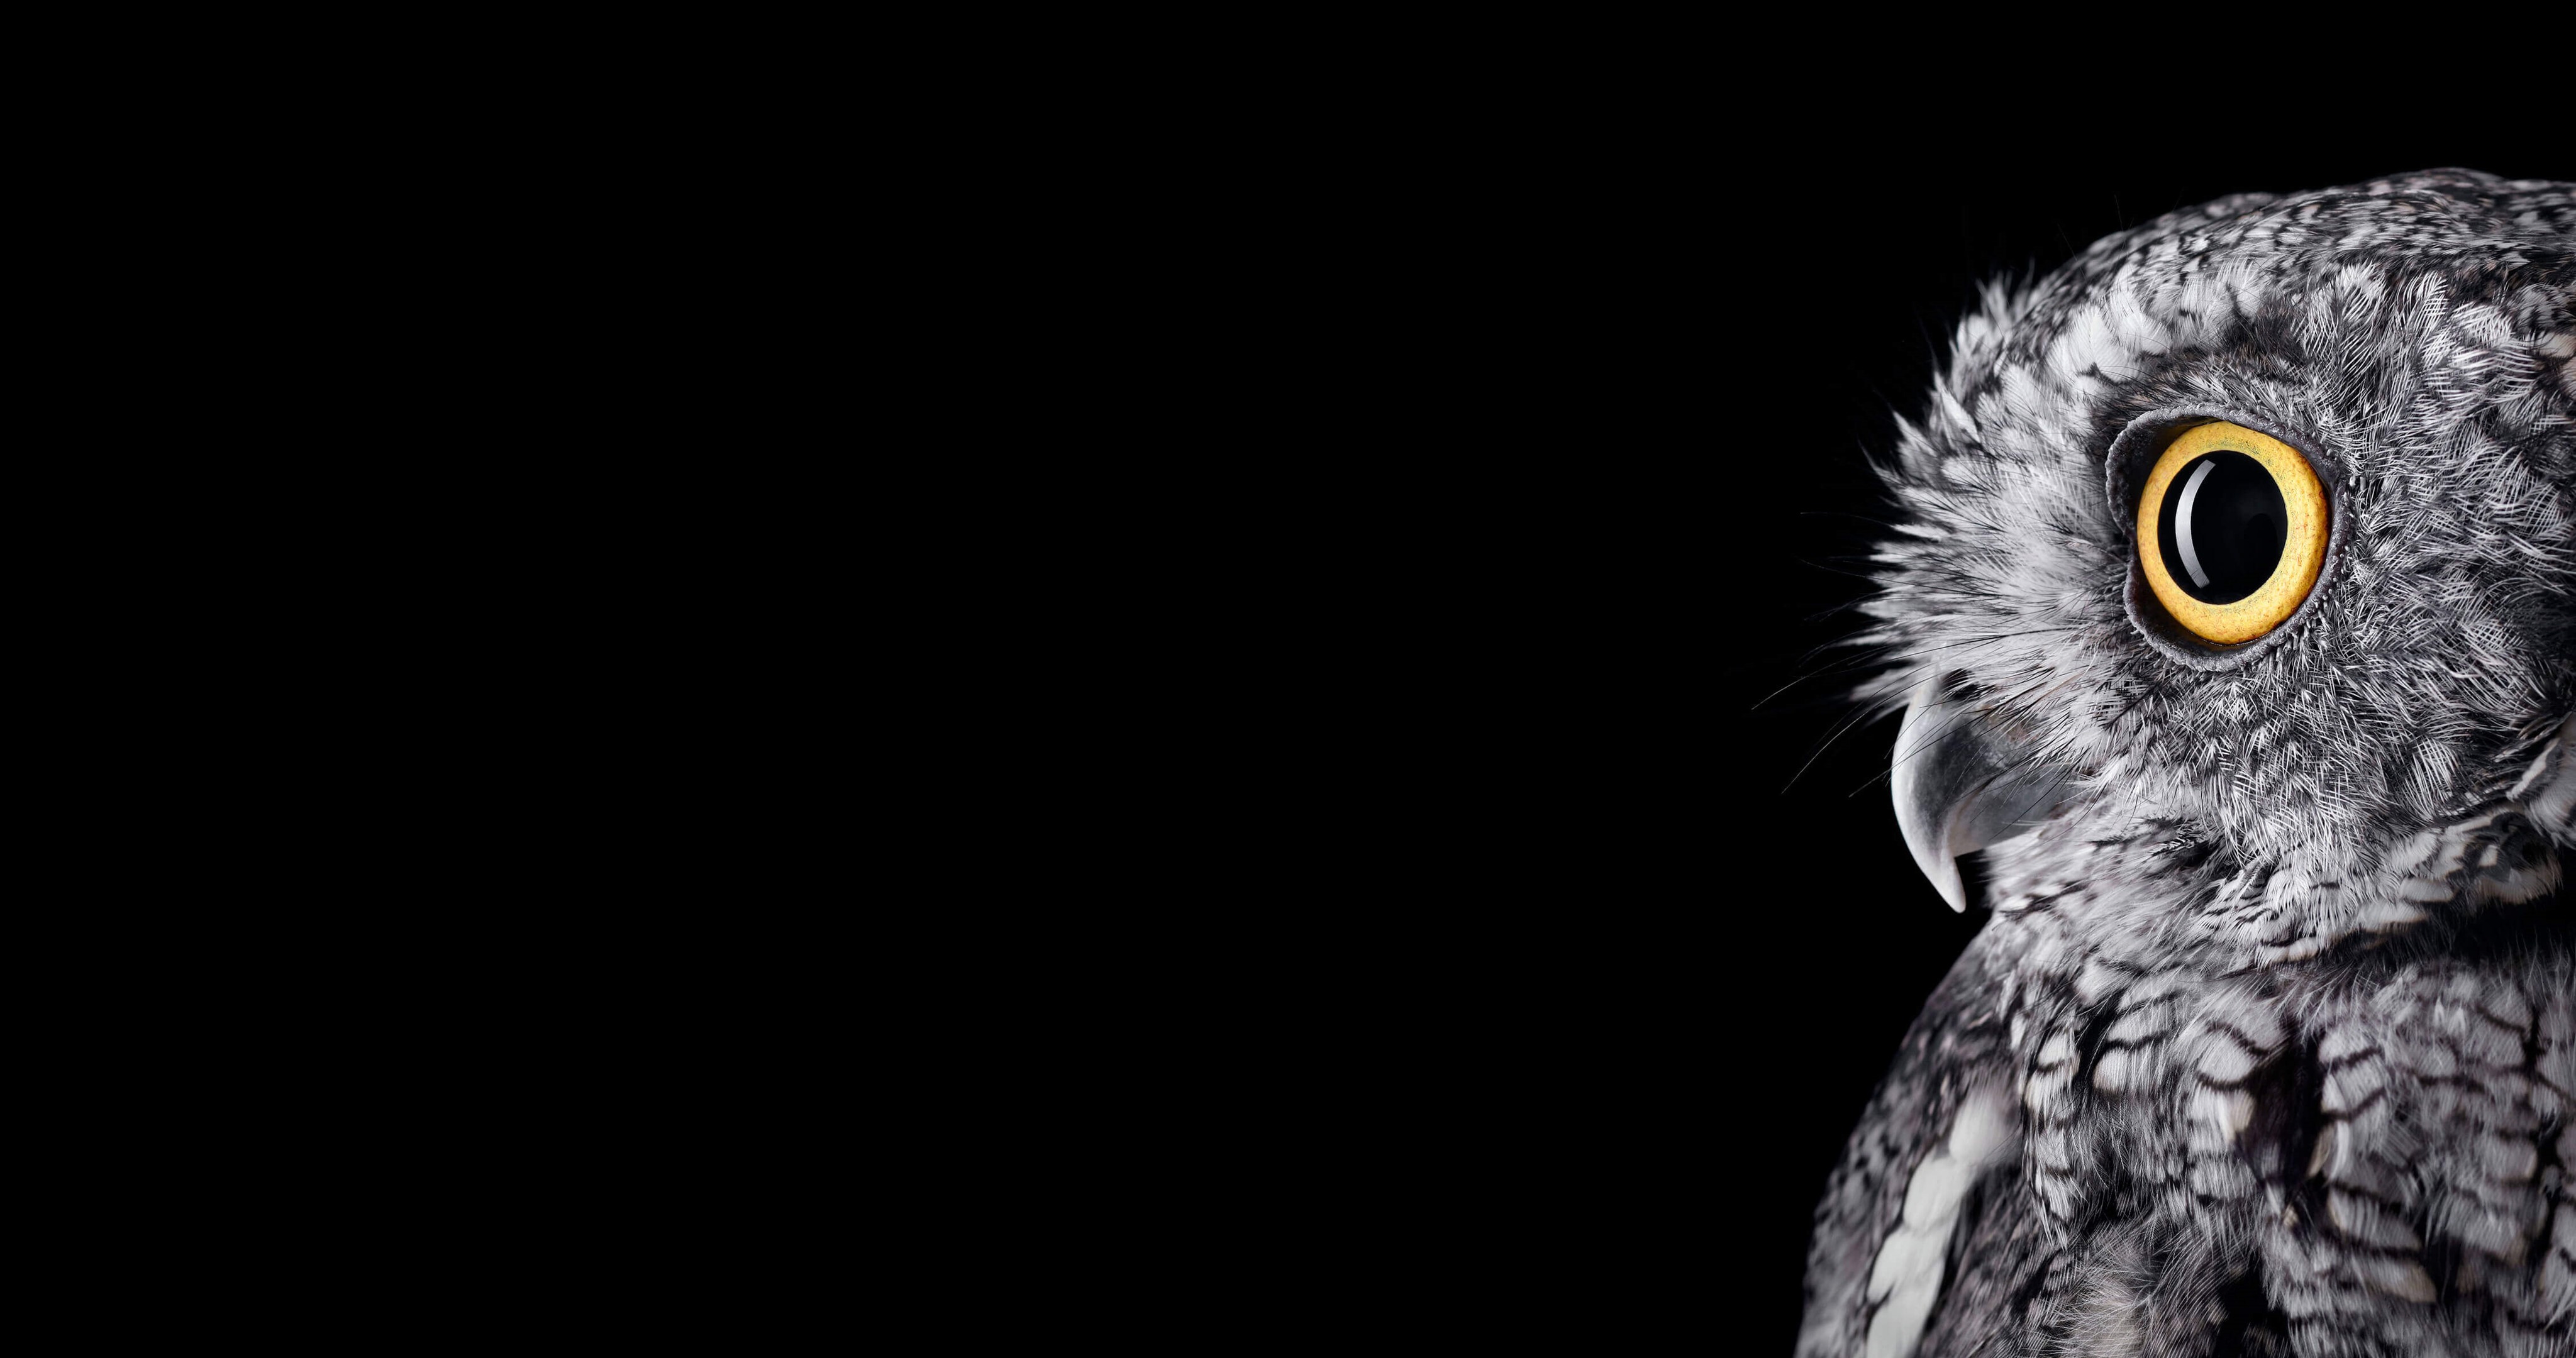 Wallpaper Microsoft Surface Microsoft Surface Studio Owls Birds Barn Owl  Background  Download Free Image